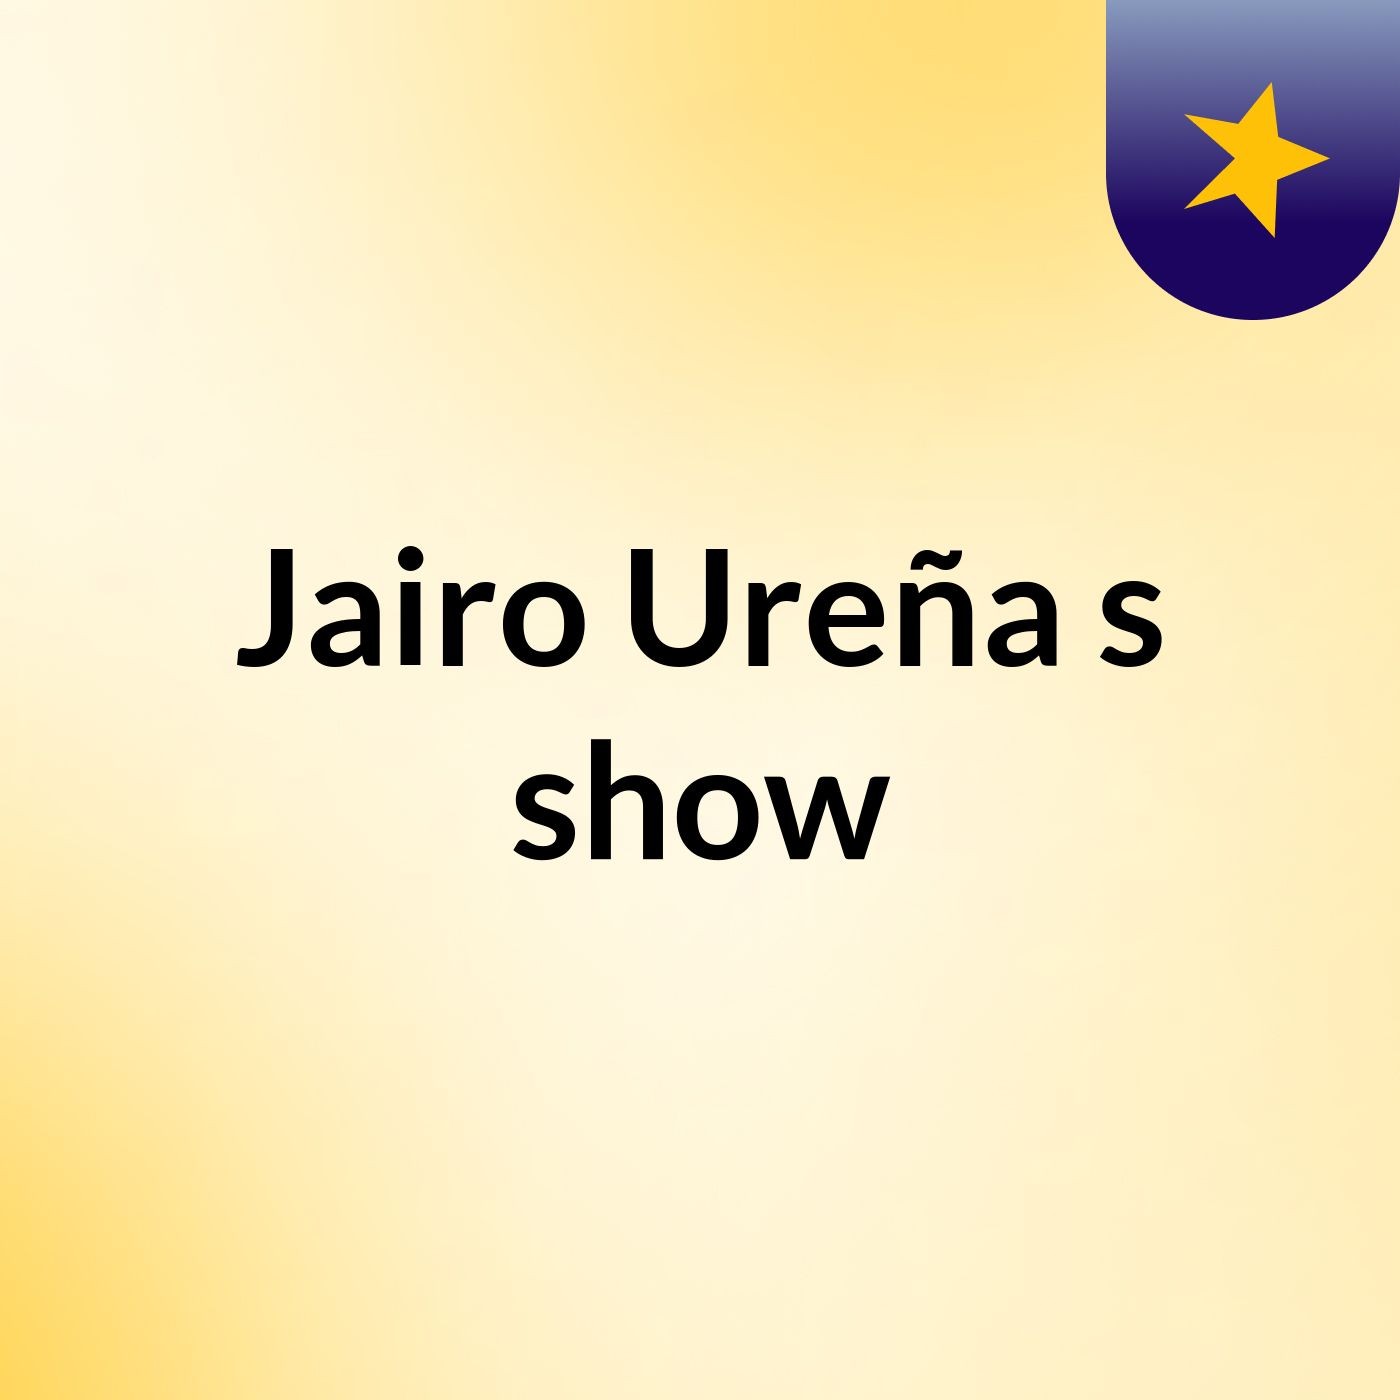 Jairo Ureña's show